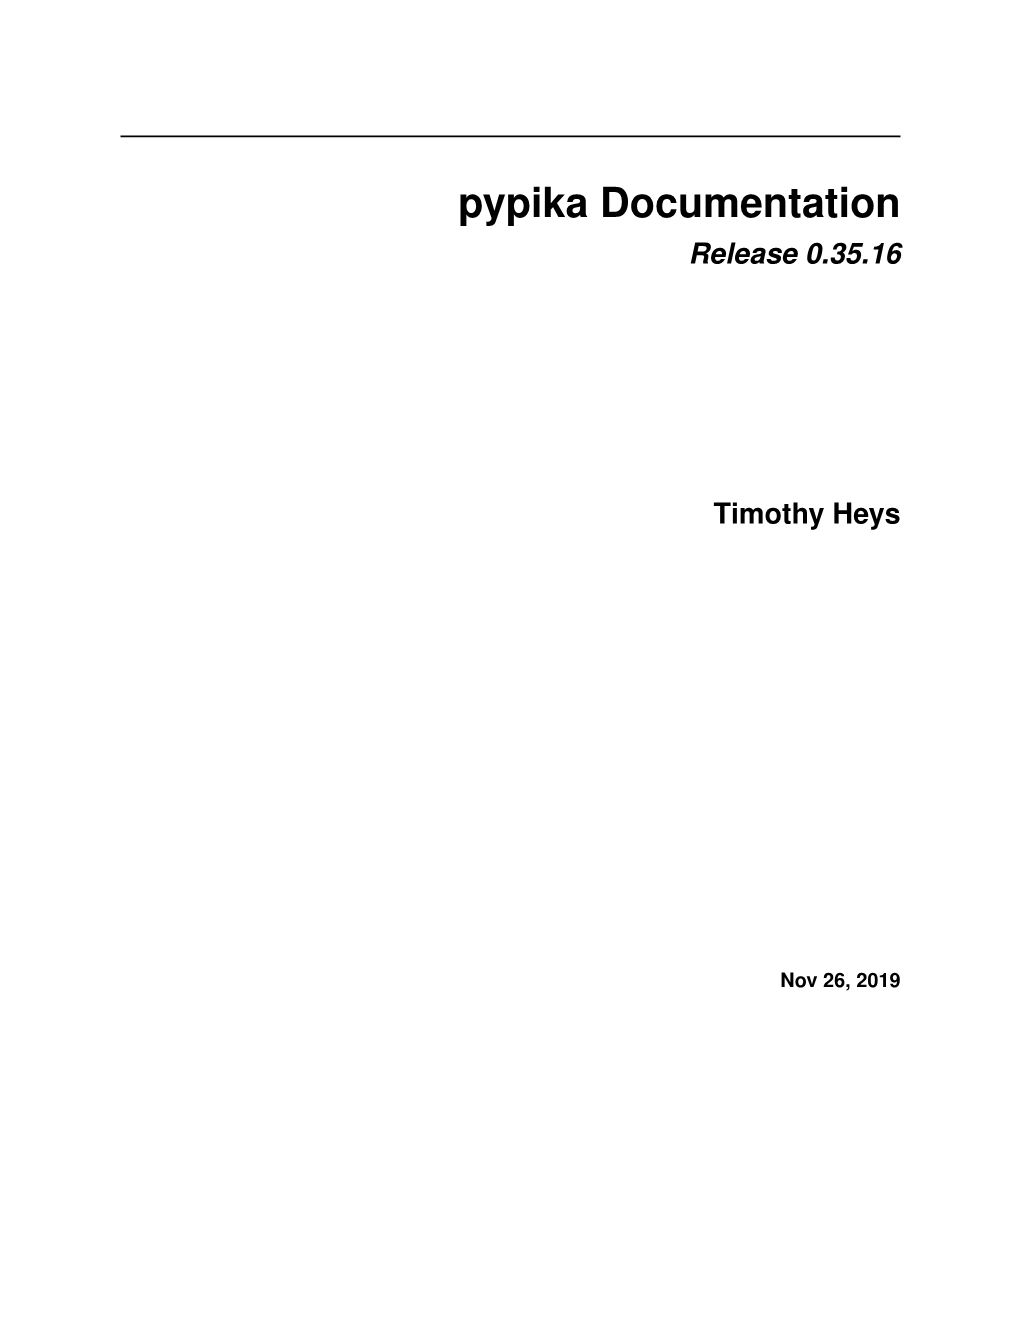 Pypika Documentation Release 0.35.16